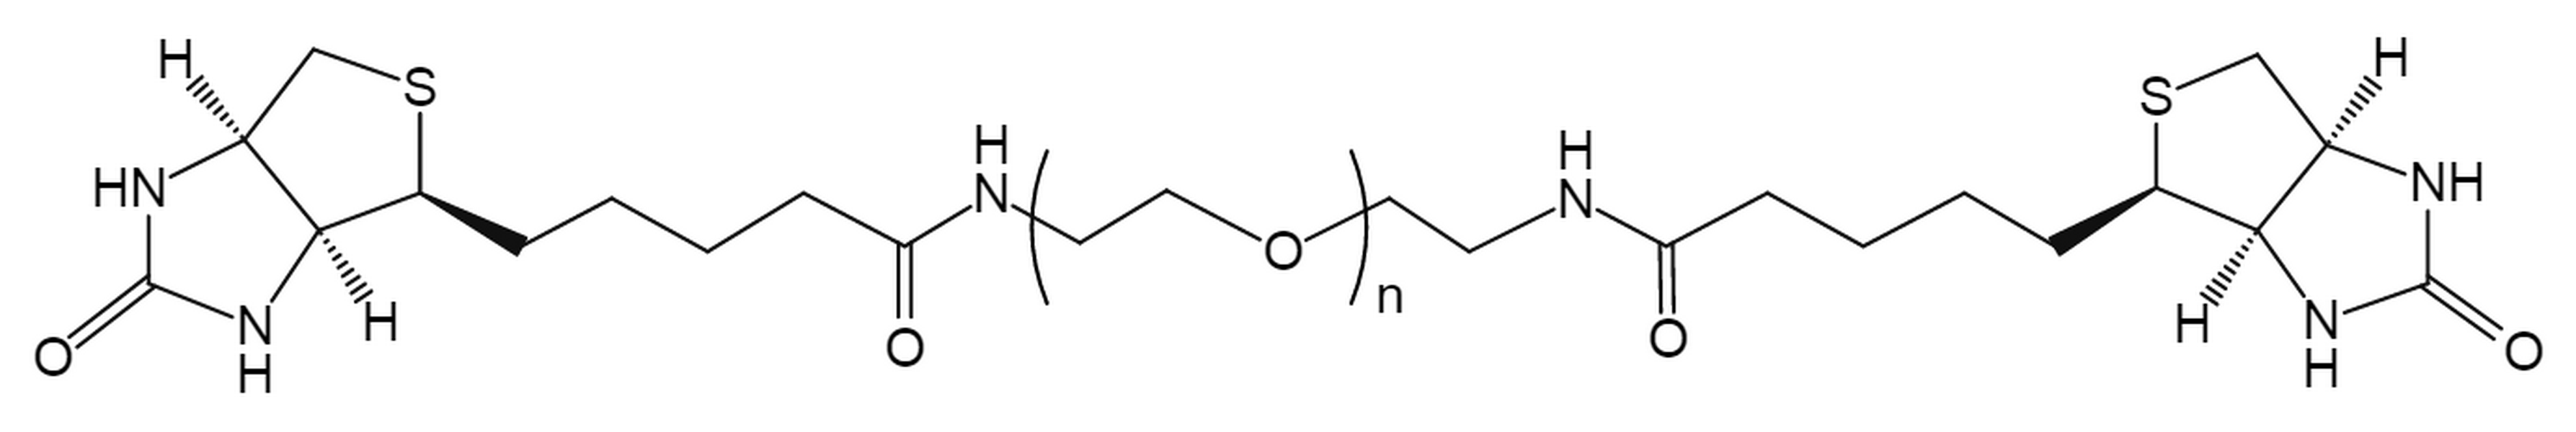 Biotin-PEG-Biotin, MW 2K